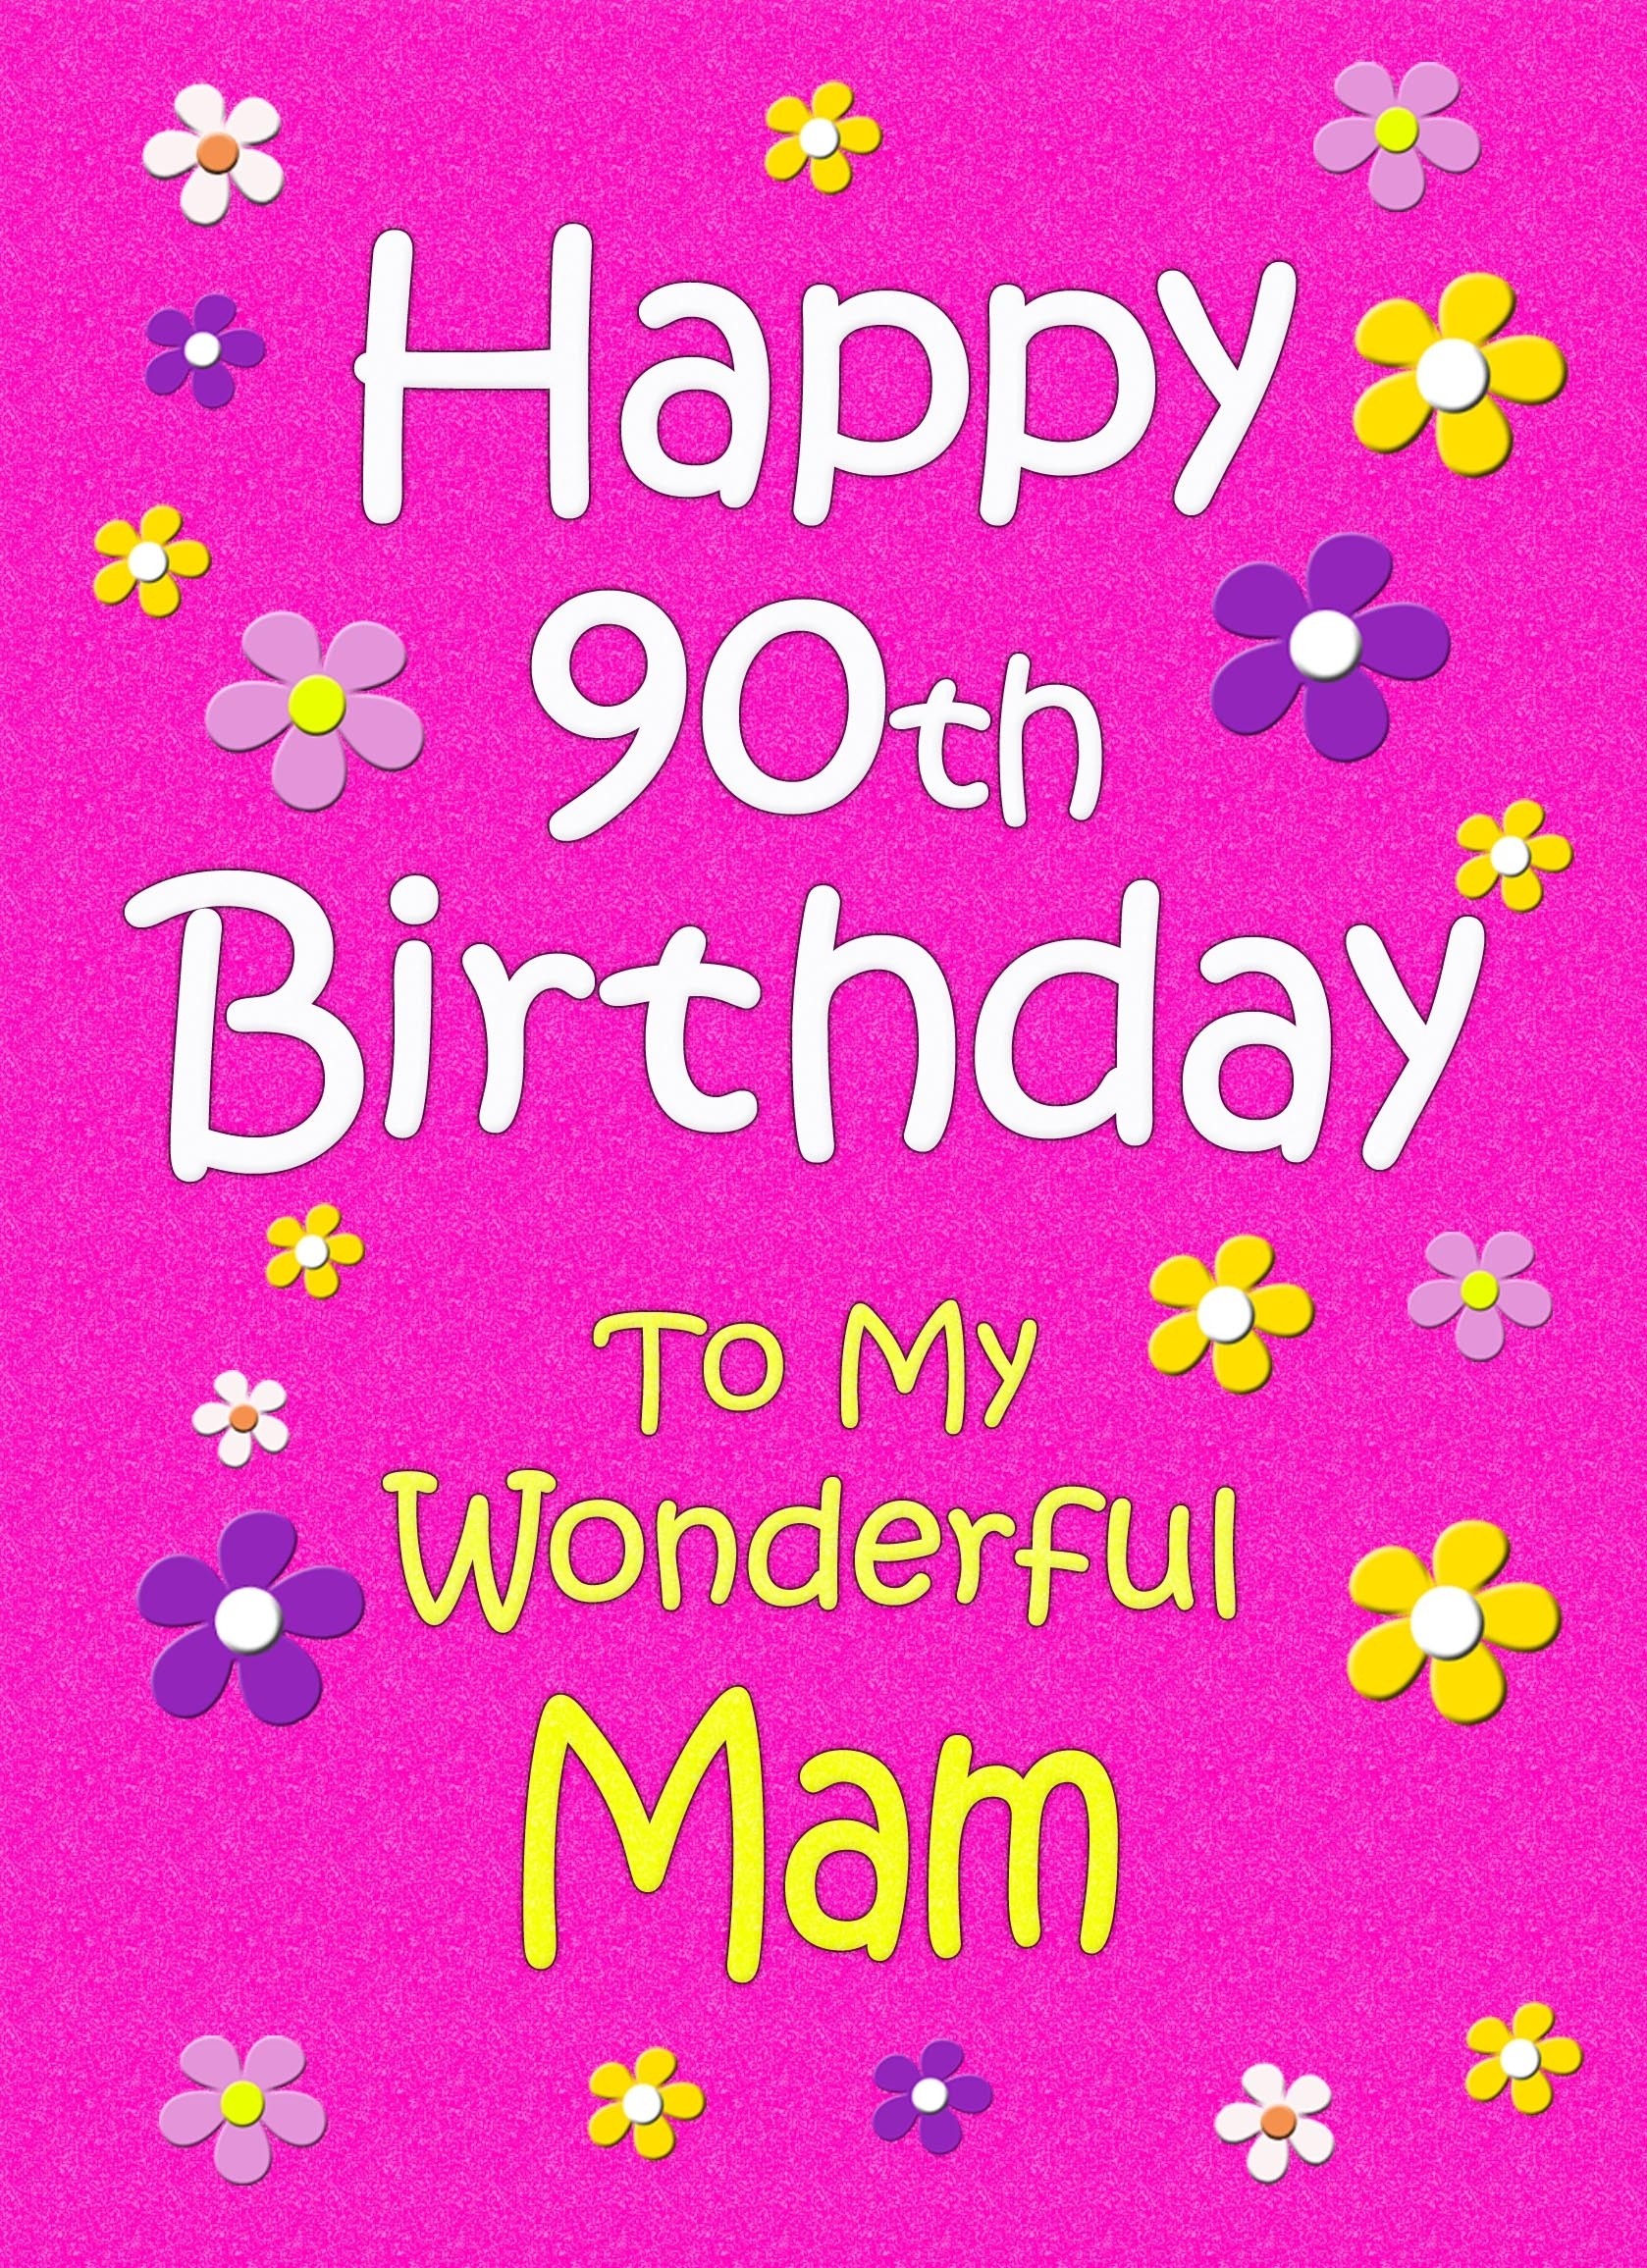 Mam 90th Birthday Card (Pink)